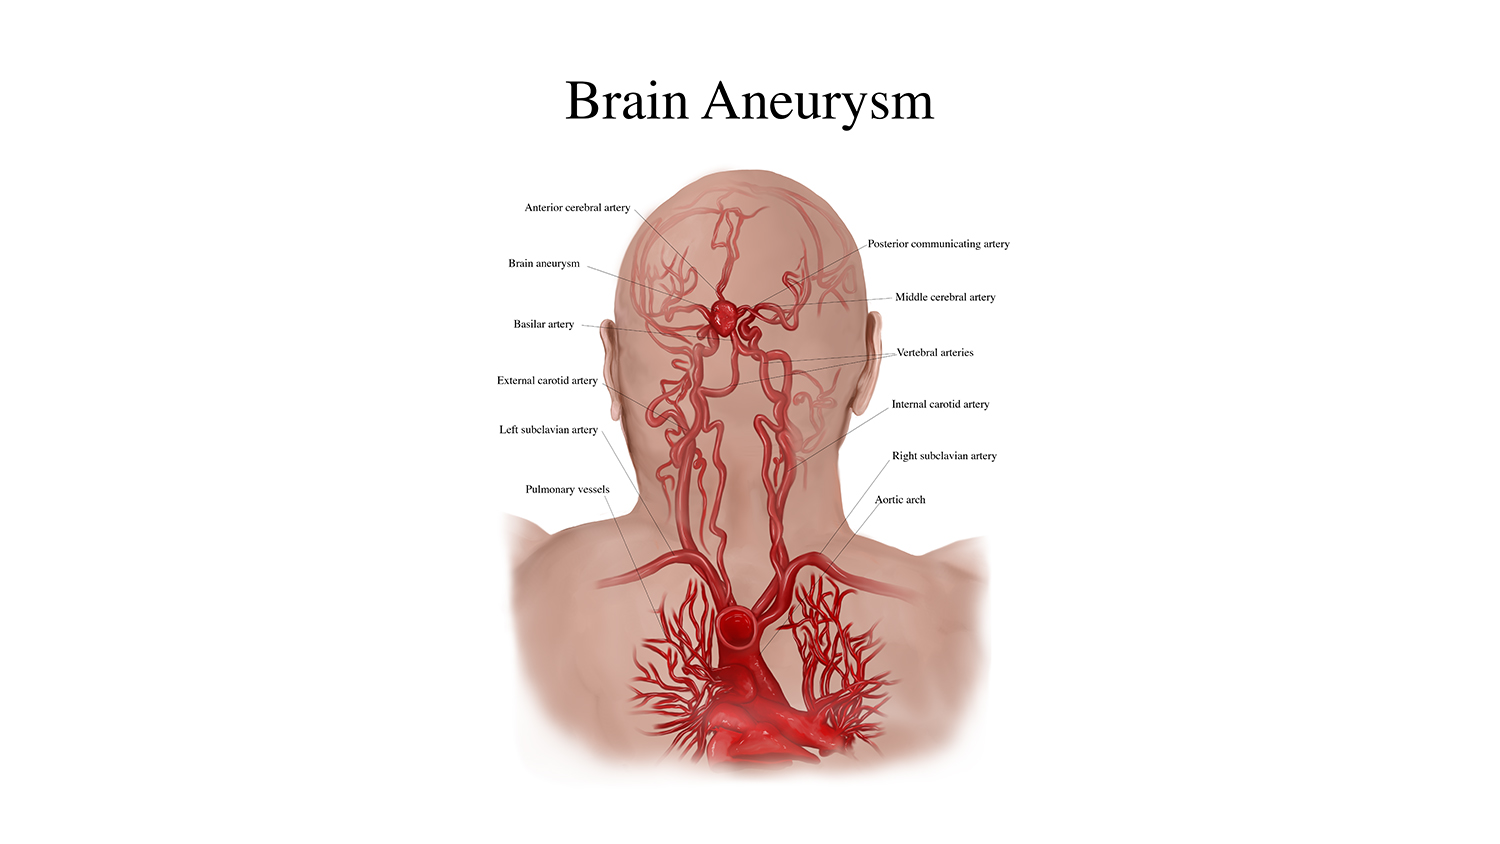 An illustration of a brain aneurysm